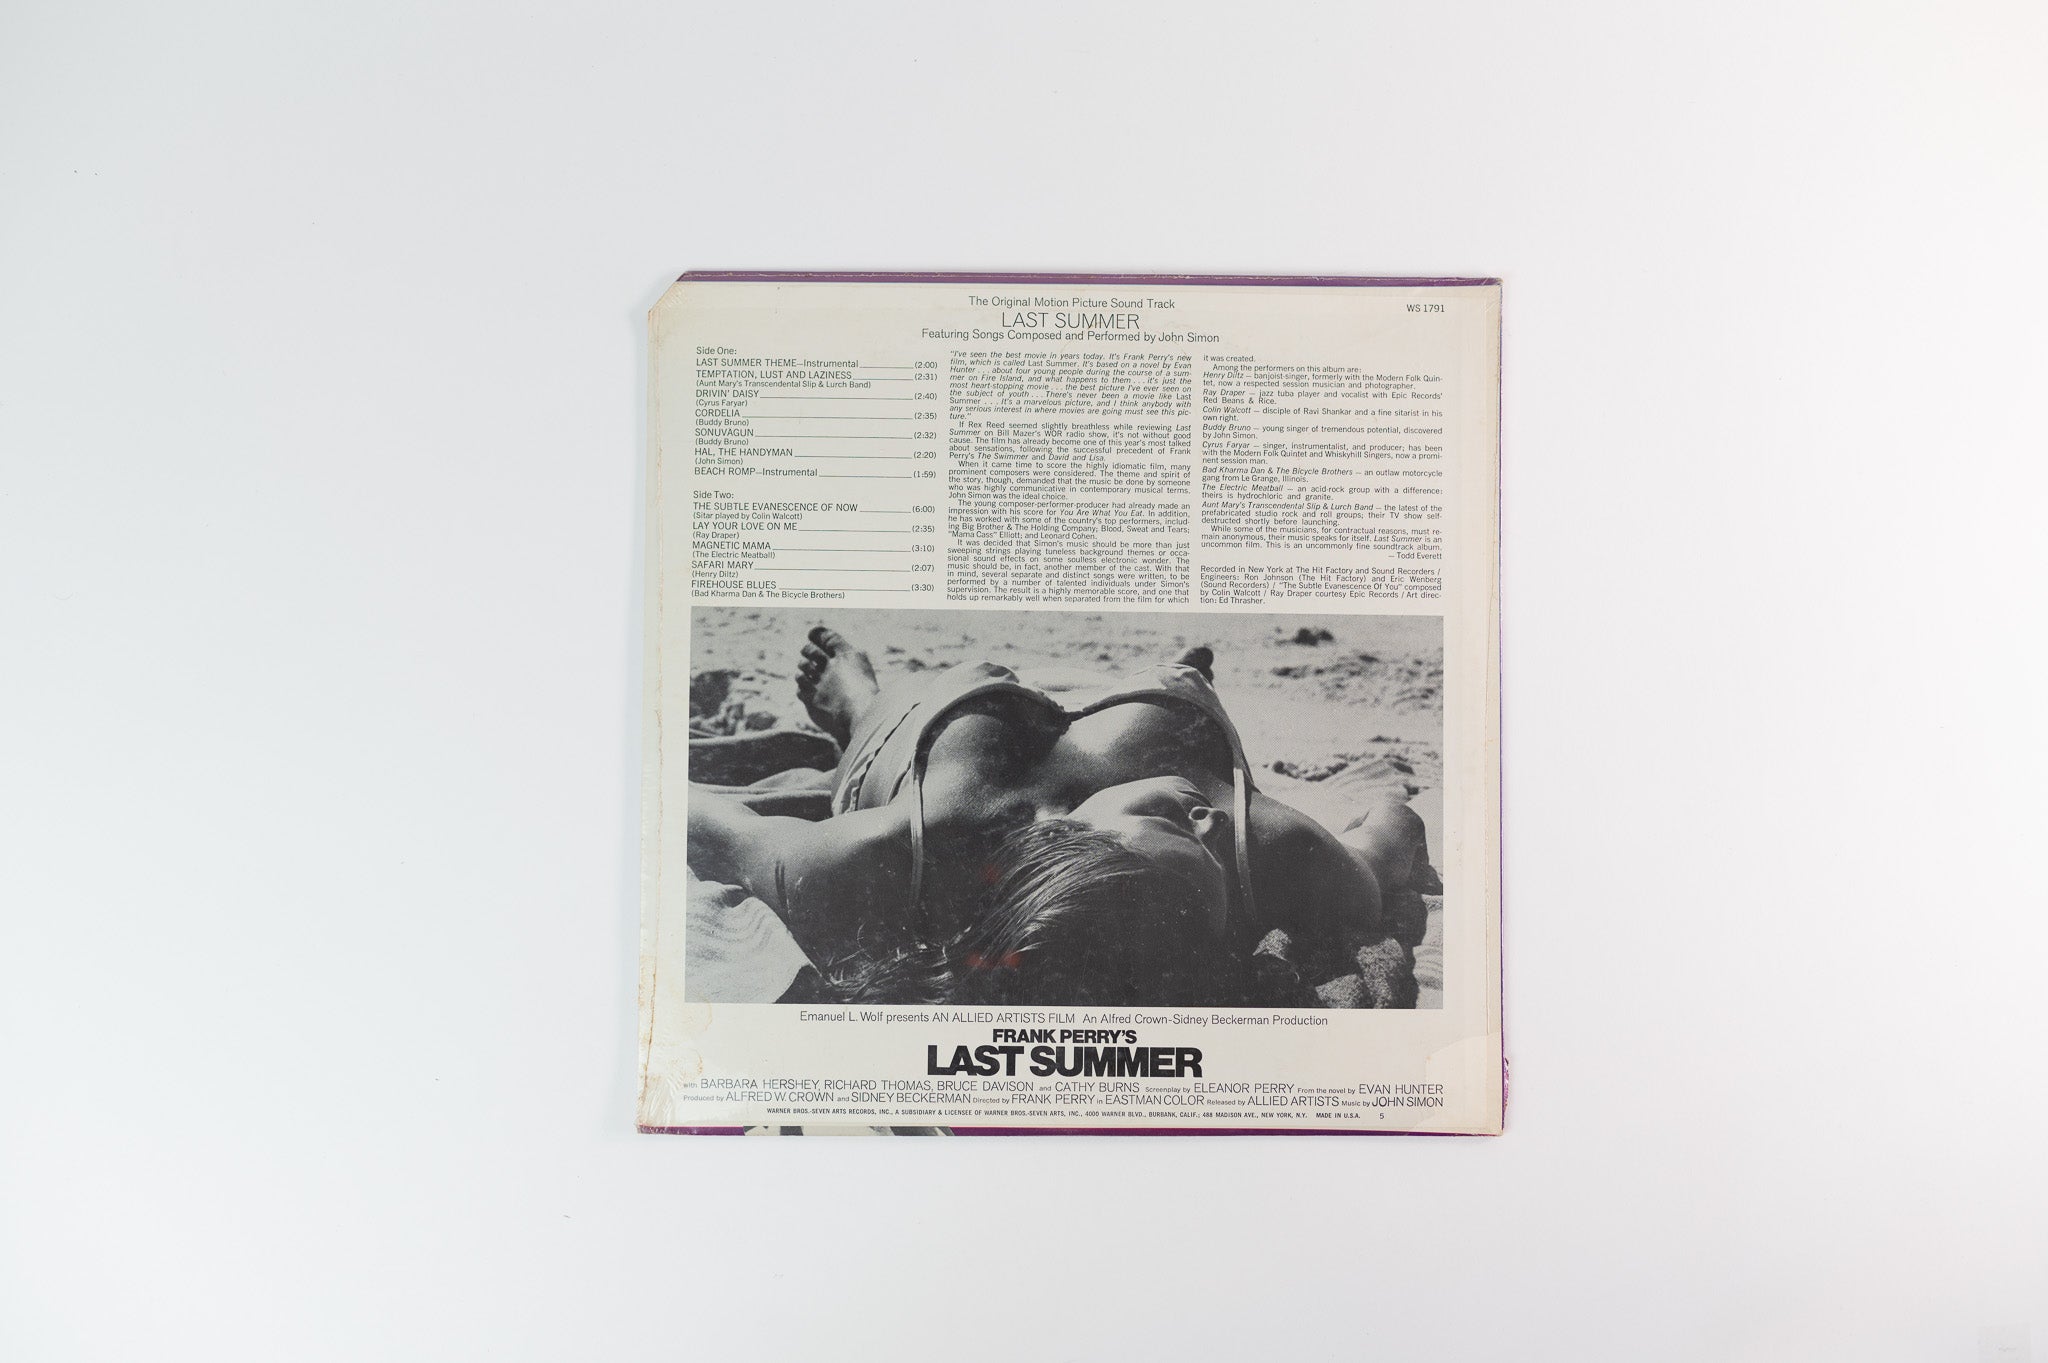 John Simon - Last Summer Original Soundtrack on Warner Bros. Sealed